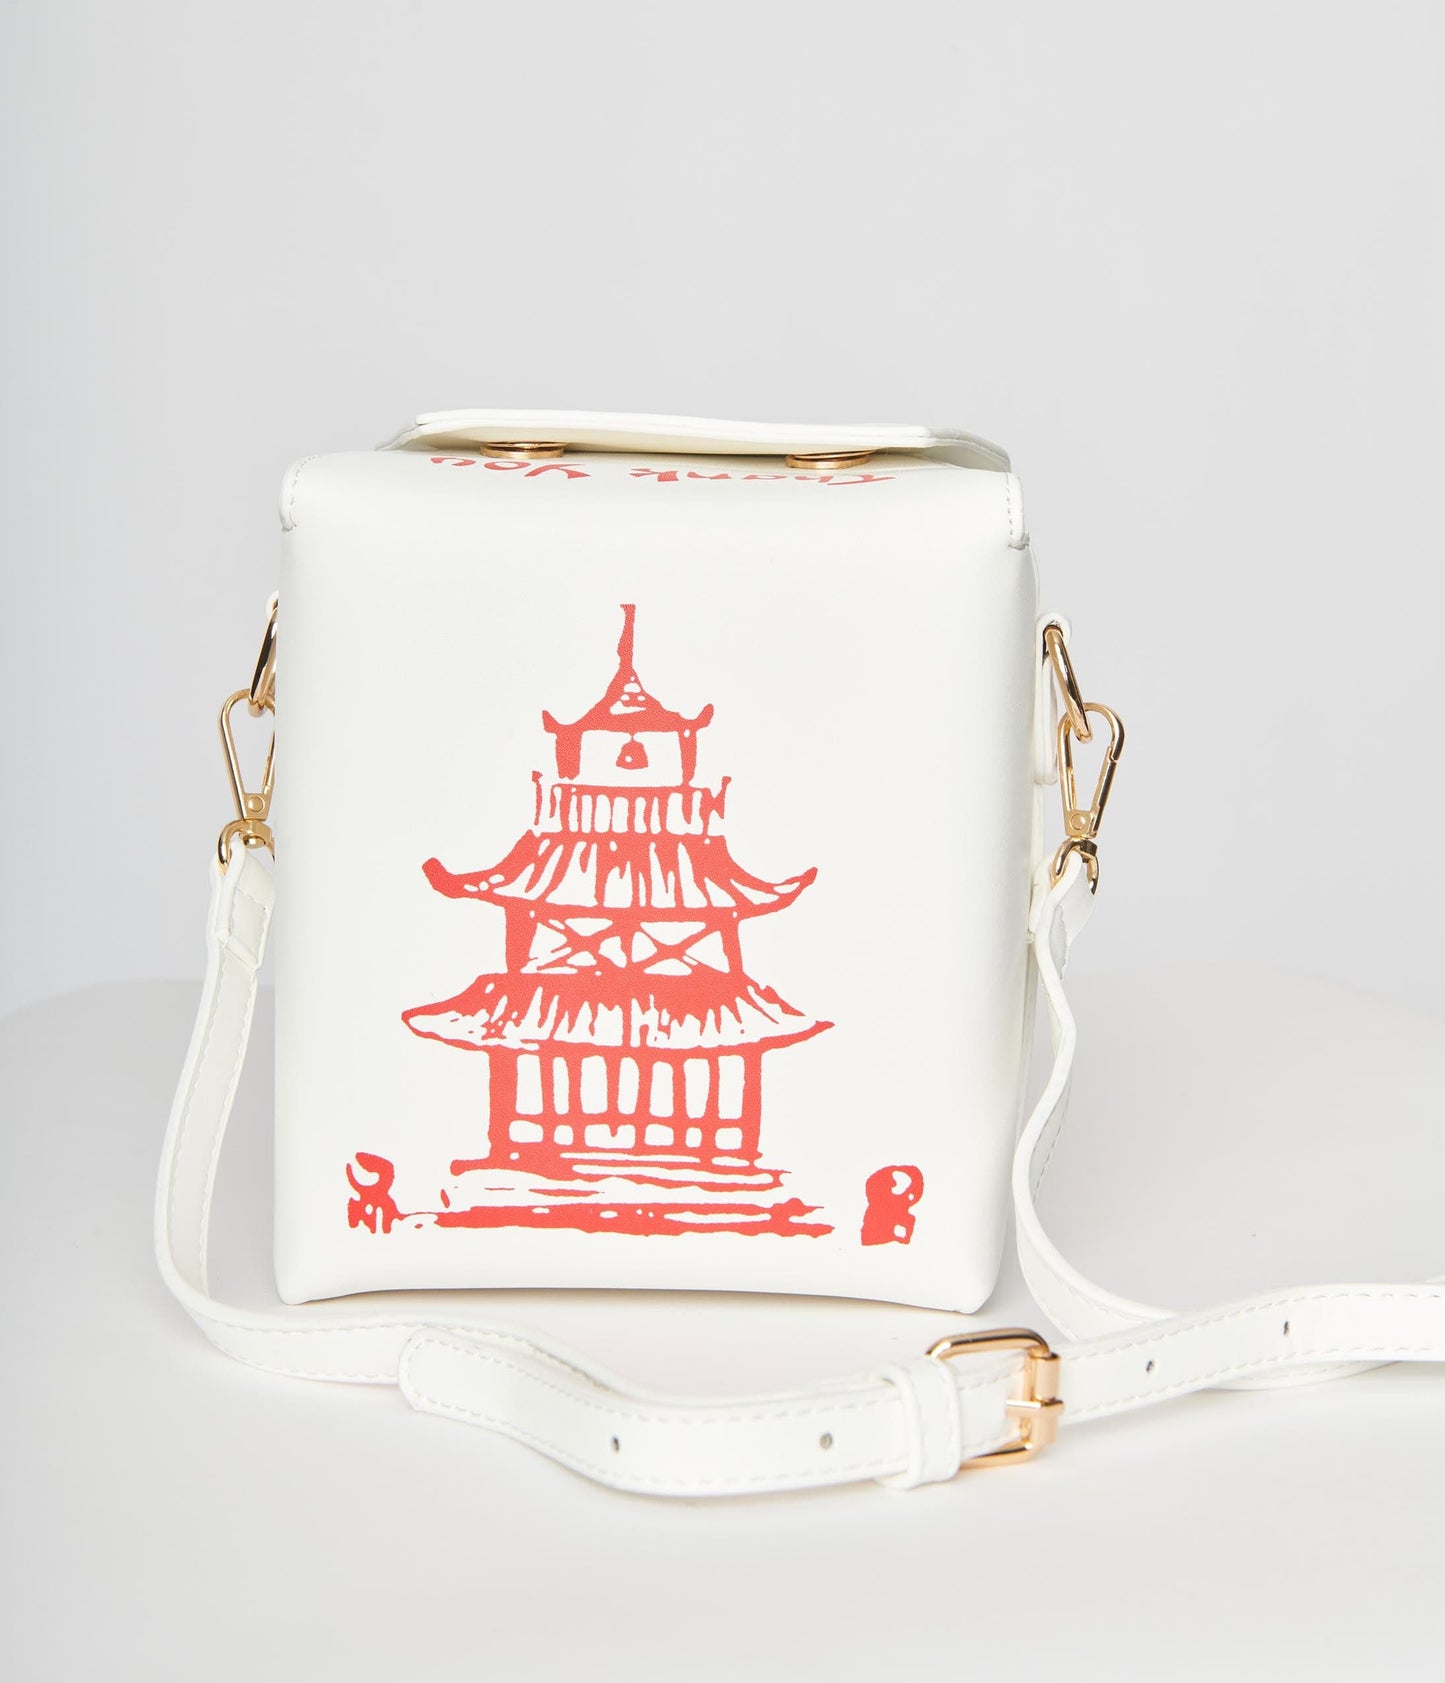 Chinese Takeout Box Leatherette Handbag